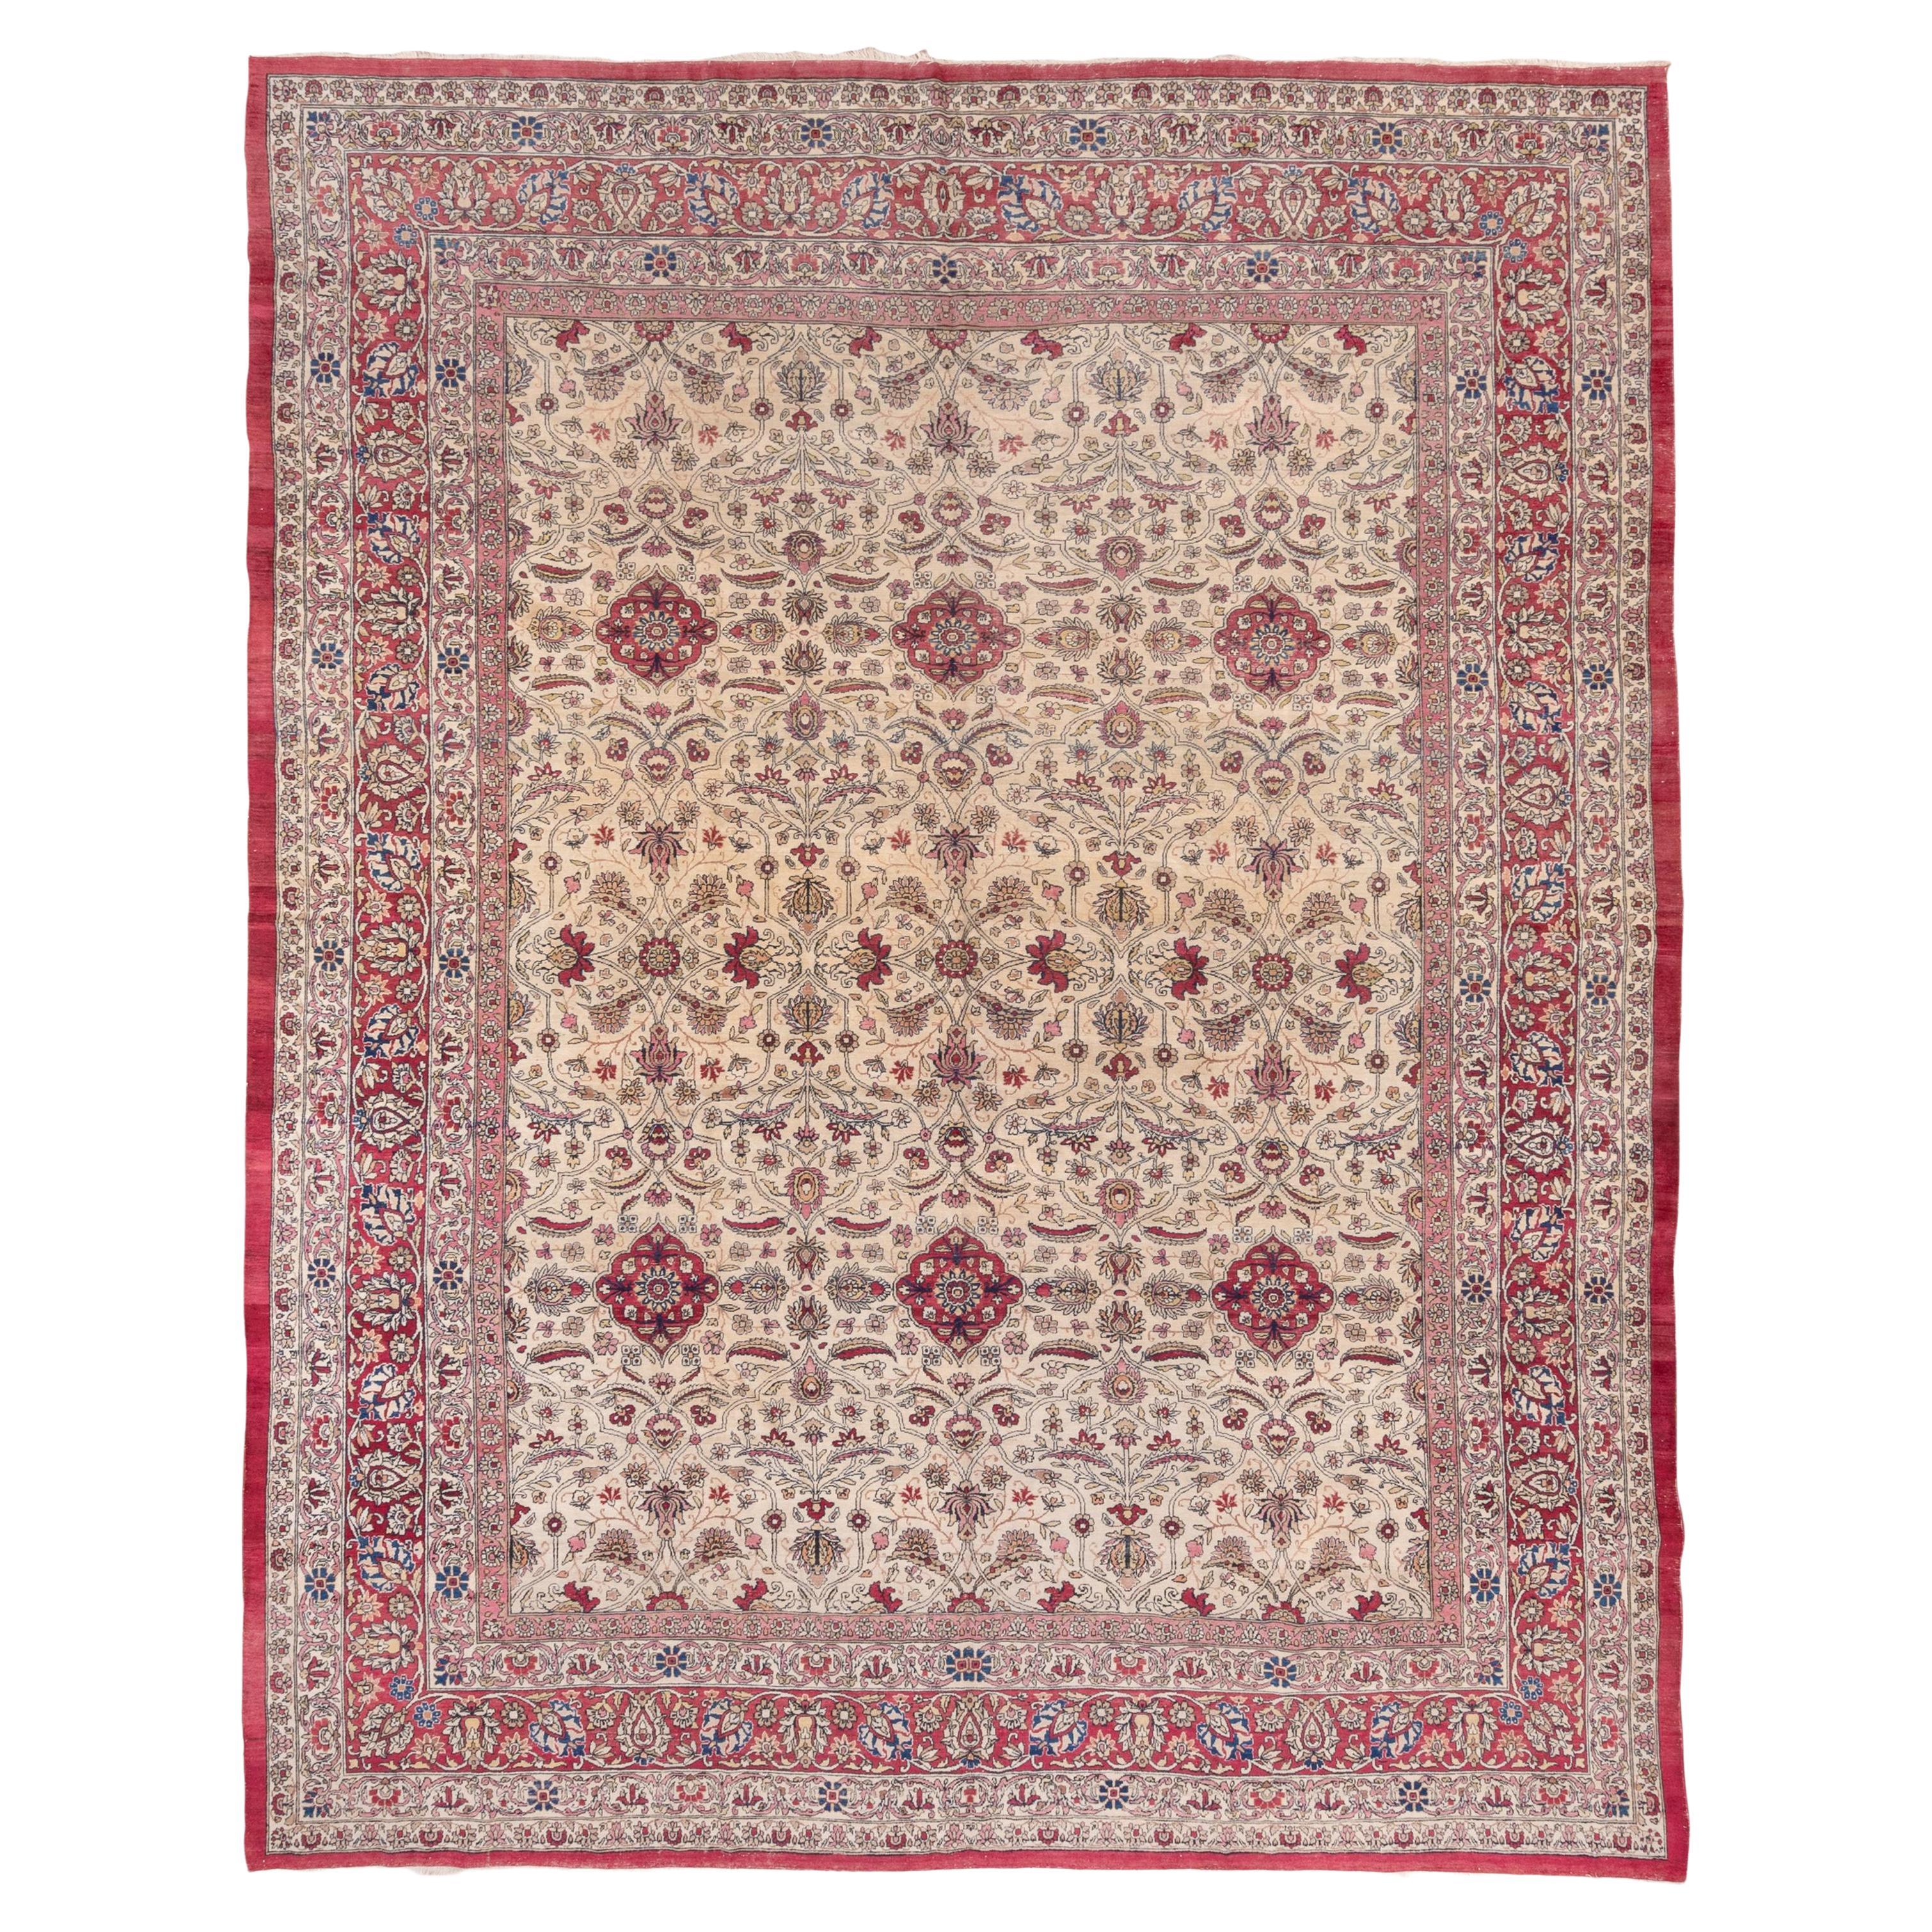 Antique Persian Lavar Kerman Carpet, Ecru All-Over Field, Red Pink Borders For Sale